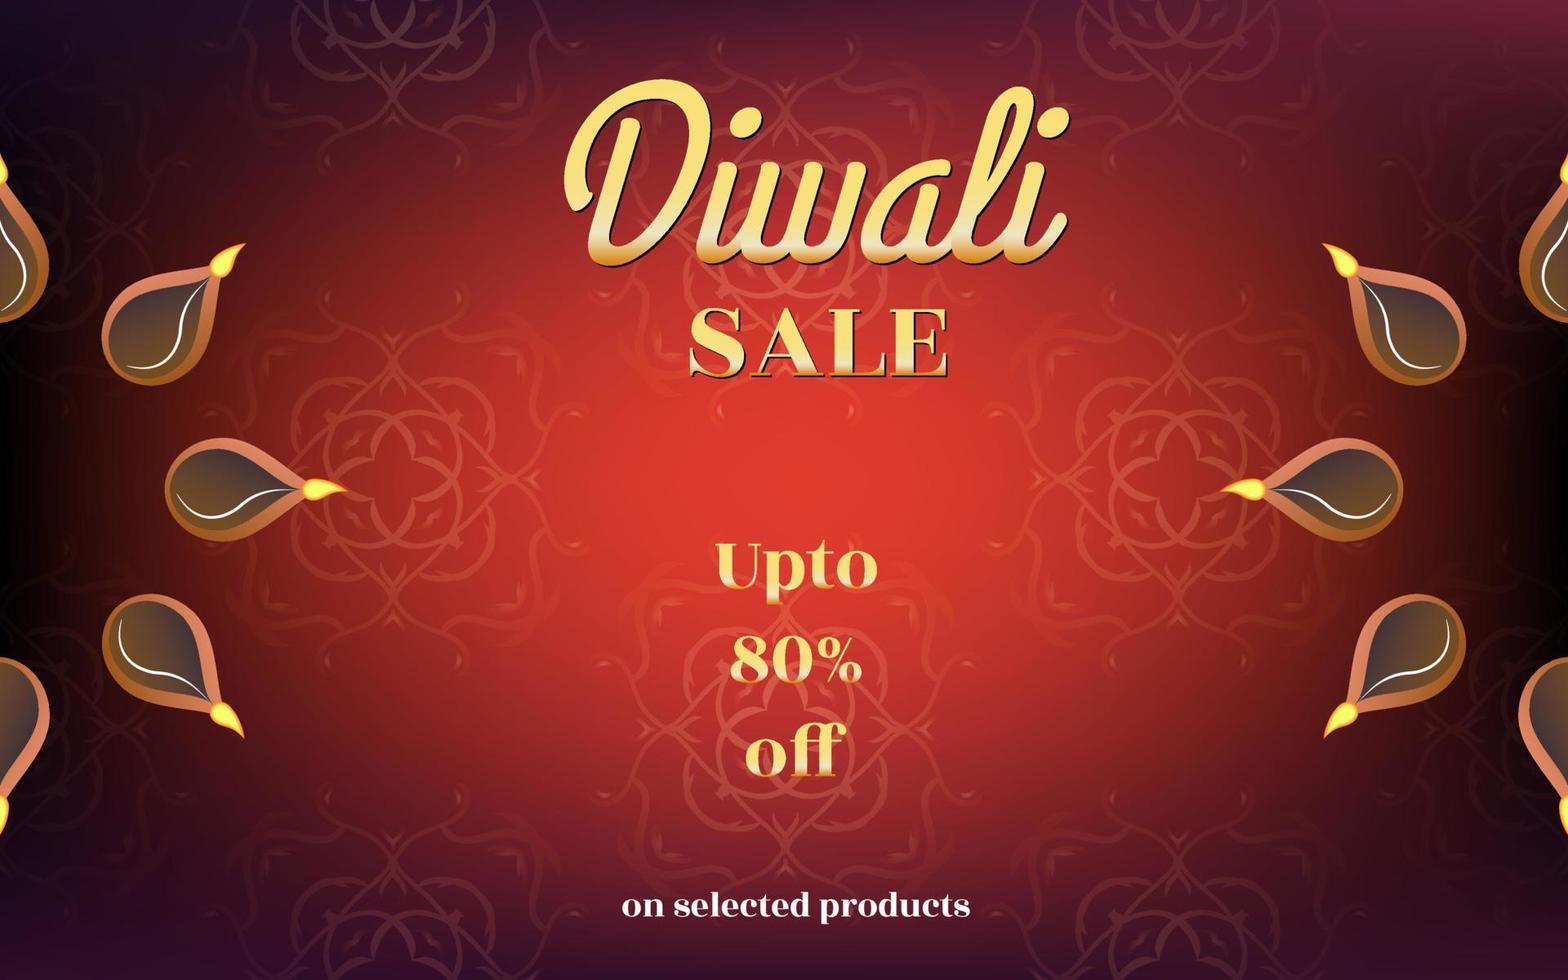 happy diwali - banner colorido de vendas de diwali, ilustração vetorial de banner feliz de vendas de diwali, vetor